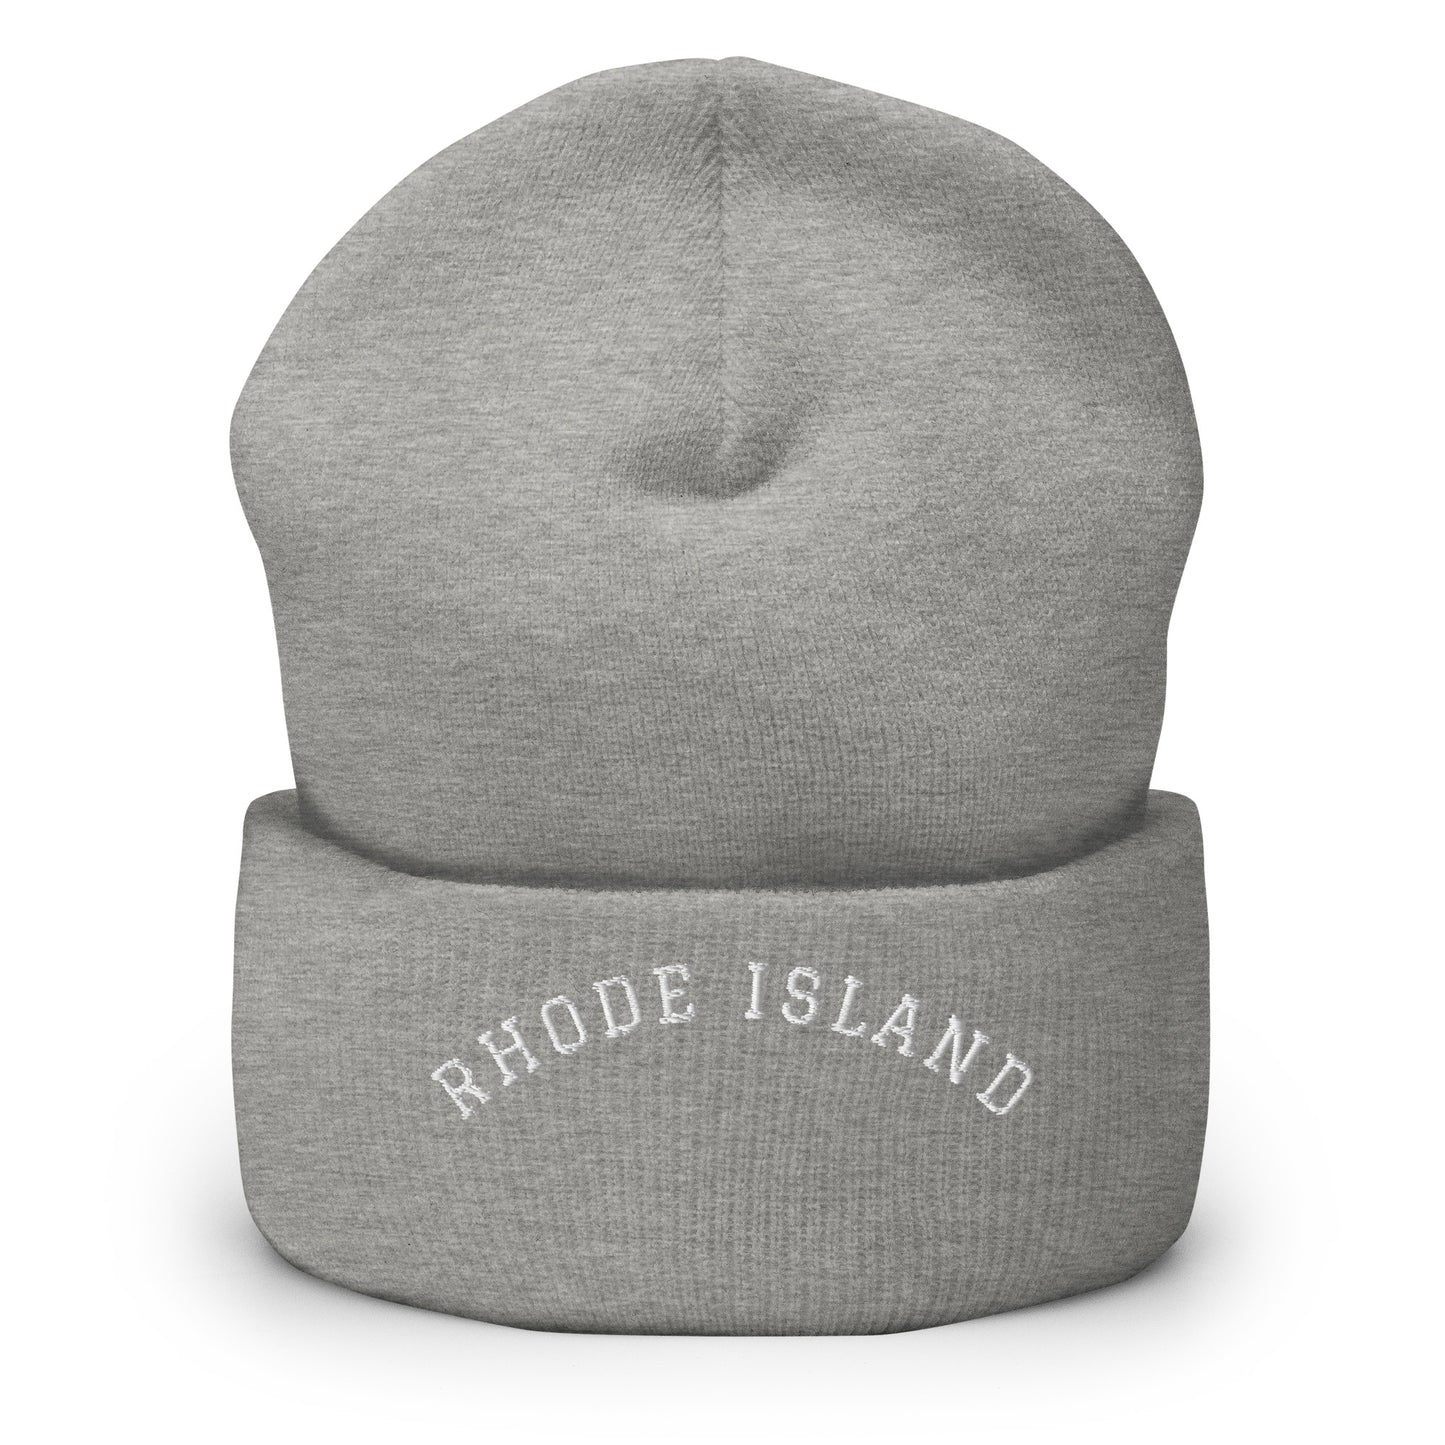 Rhode Island Arch Cuffed Beanie Hat